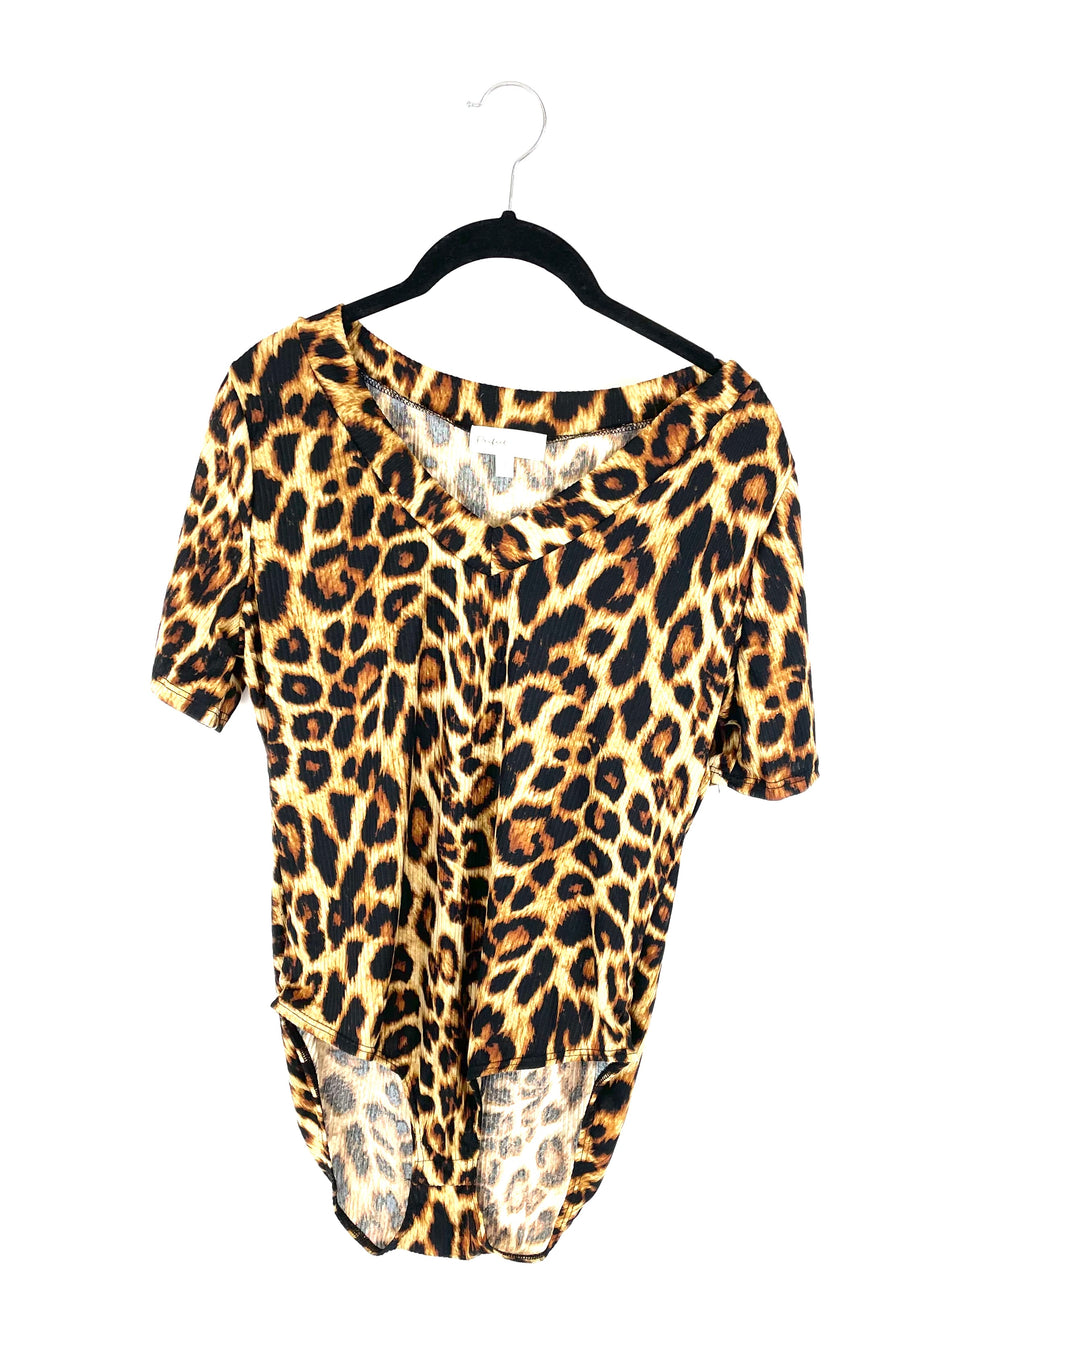 Cheetah Print Bodysuit - Large